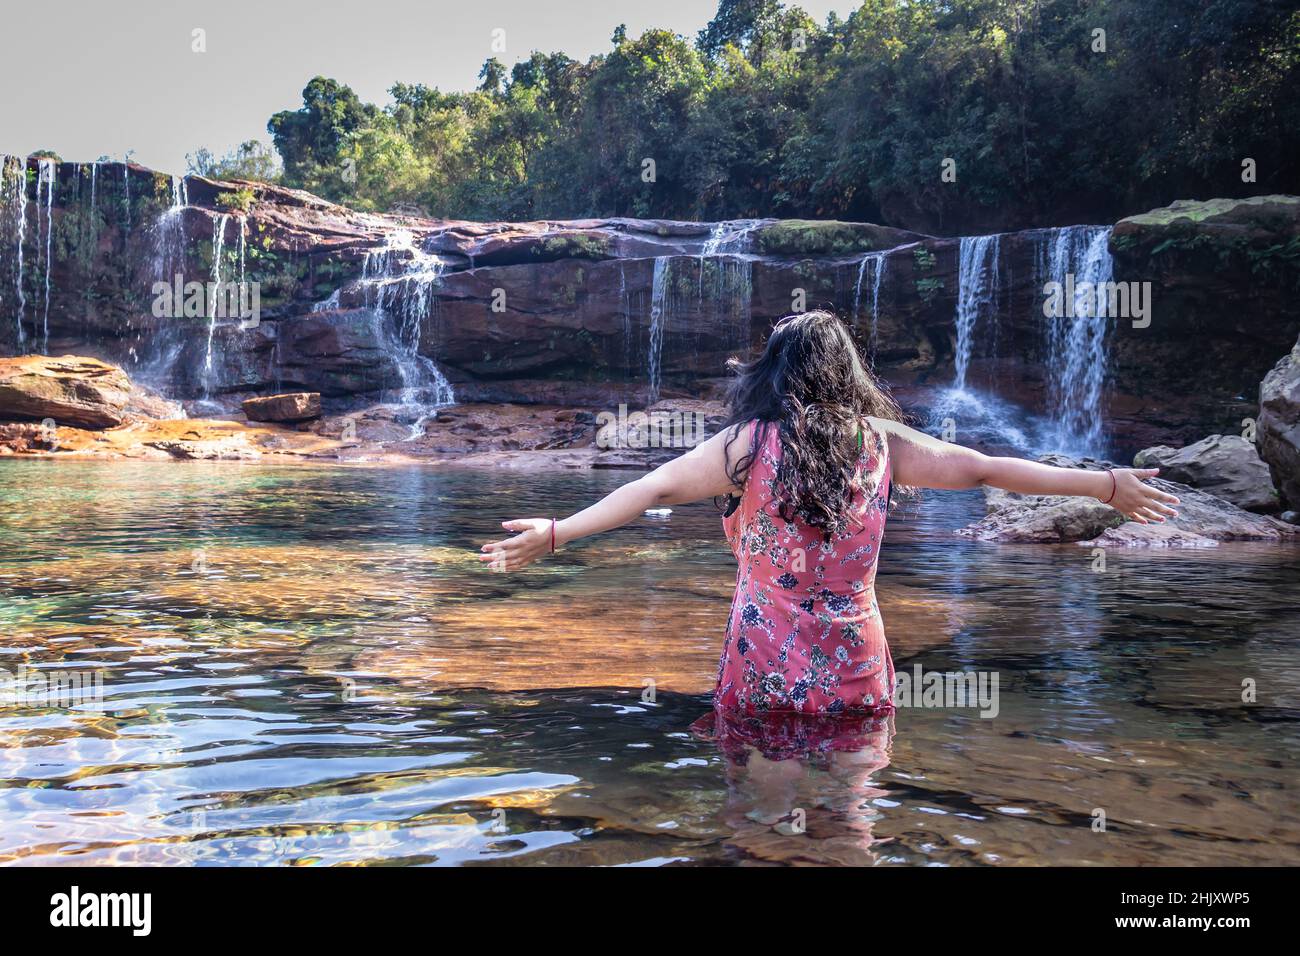 girl standing with waterfall flowing streams and calm clear water at morning image is taken at mawasawa waterfall cherrapunji meghalaya india. Stock Photo